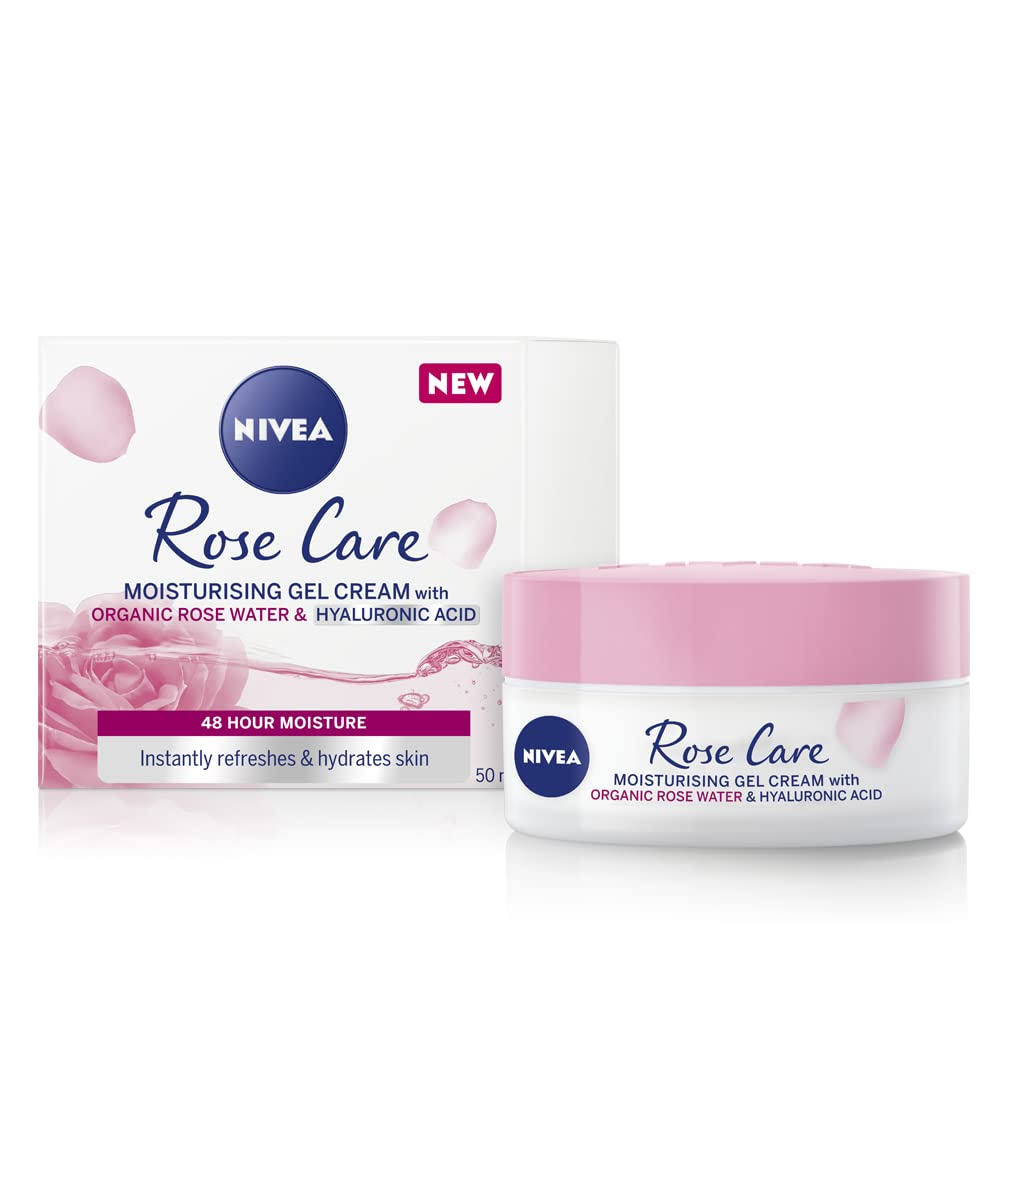 Nivea Rose Care Moisturising Gel Cream (50ml), Caring Face Moisturiser with Hyaluronic Acid, Hydrating Gel Cream for Soft Moisturised Skin